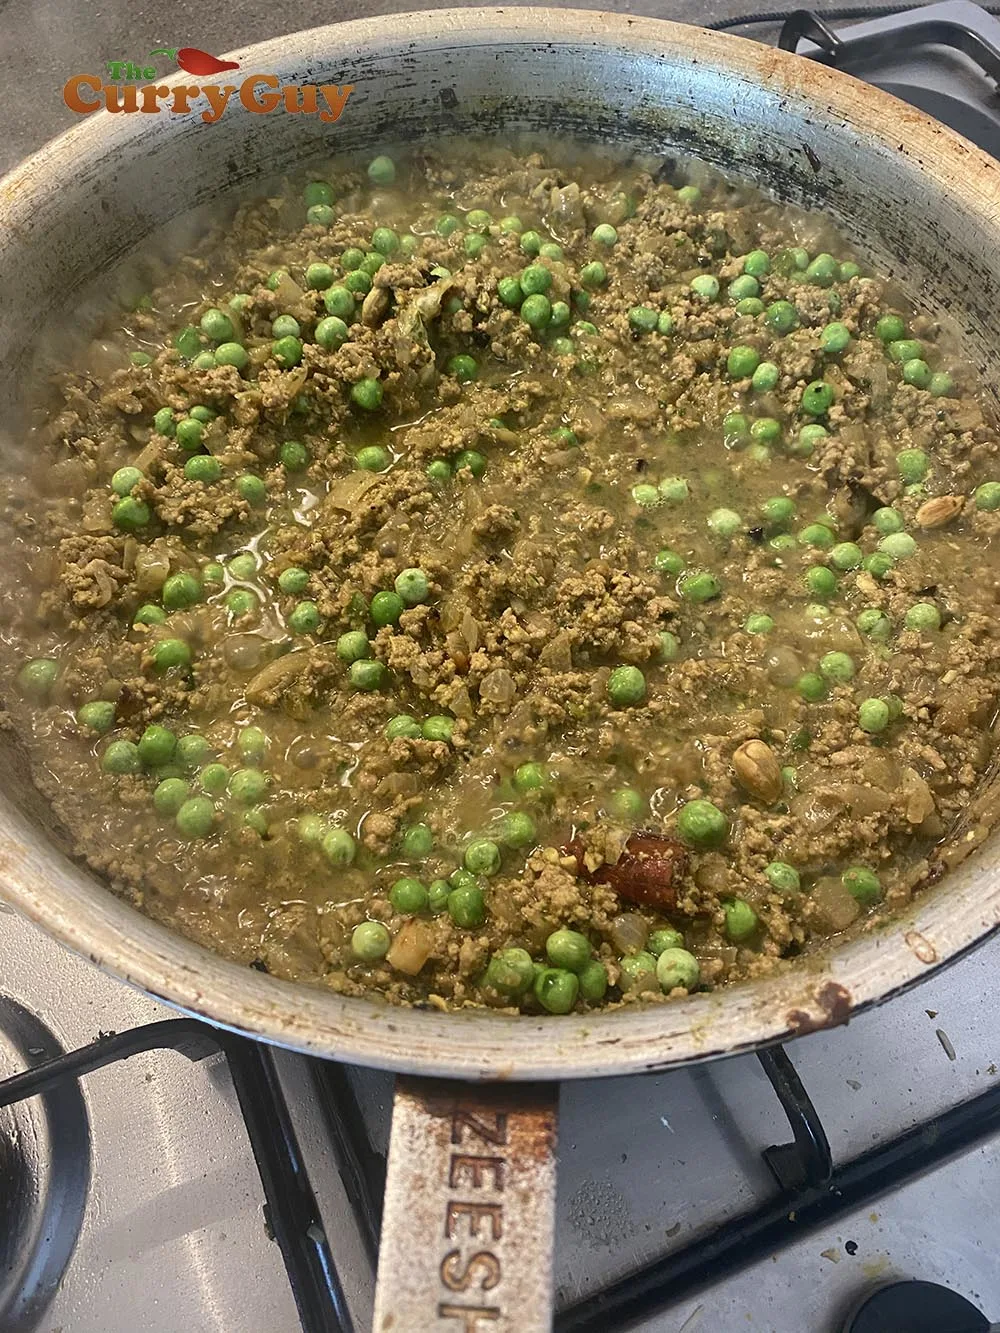 Adding the peas.